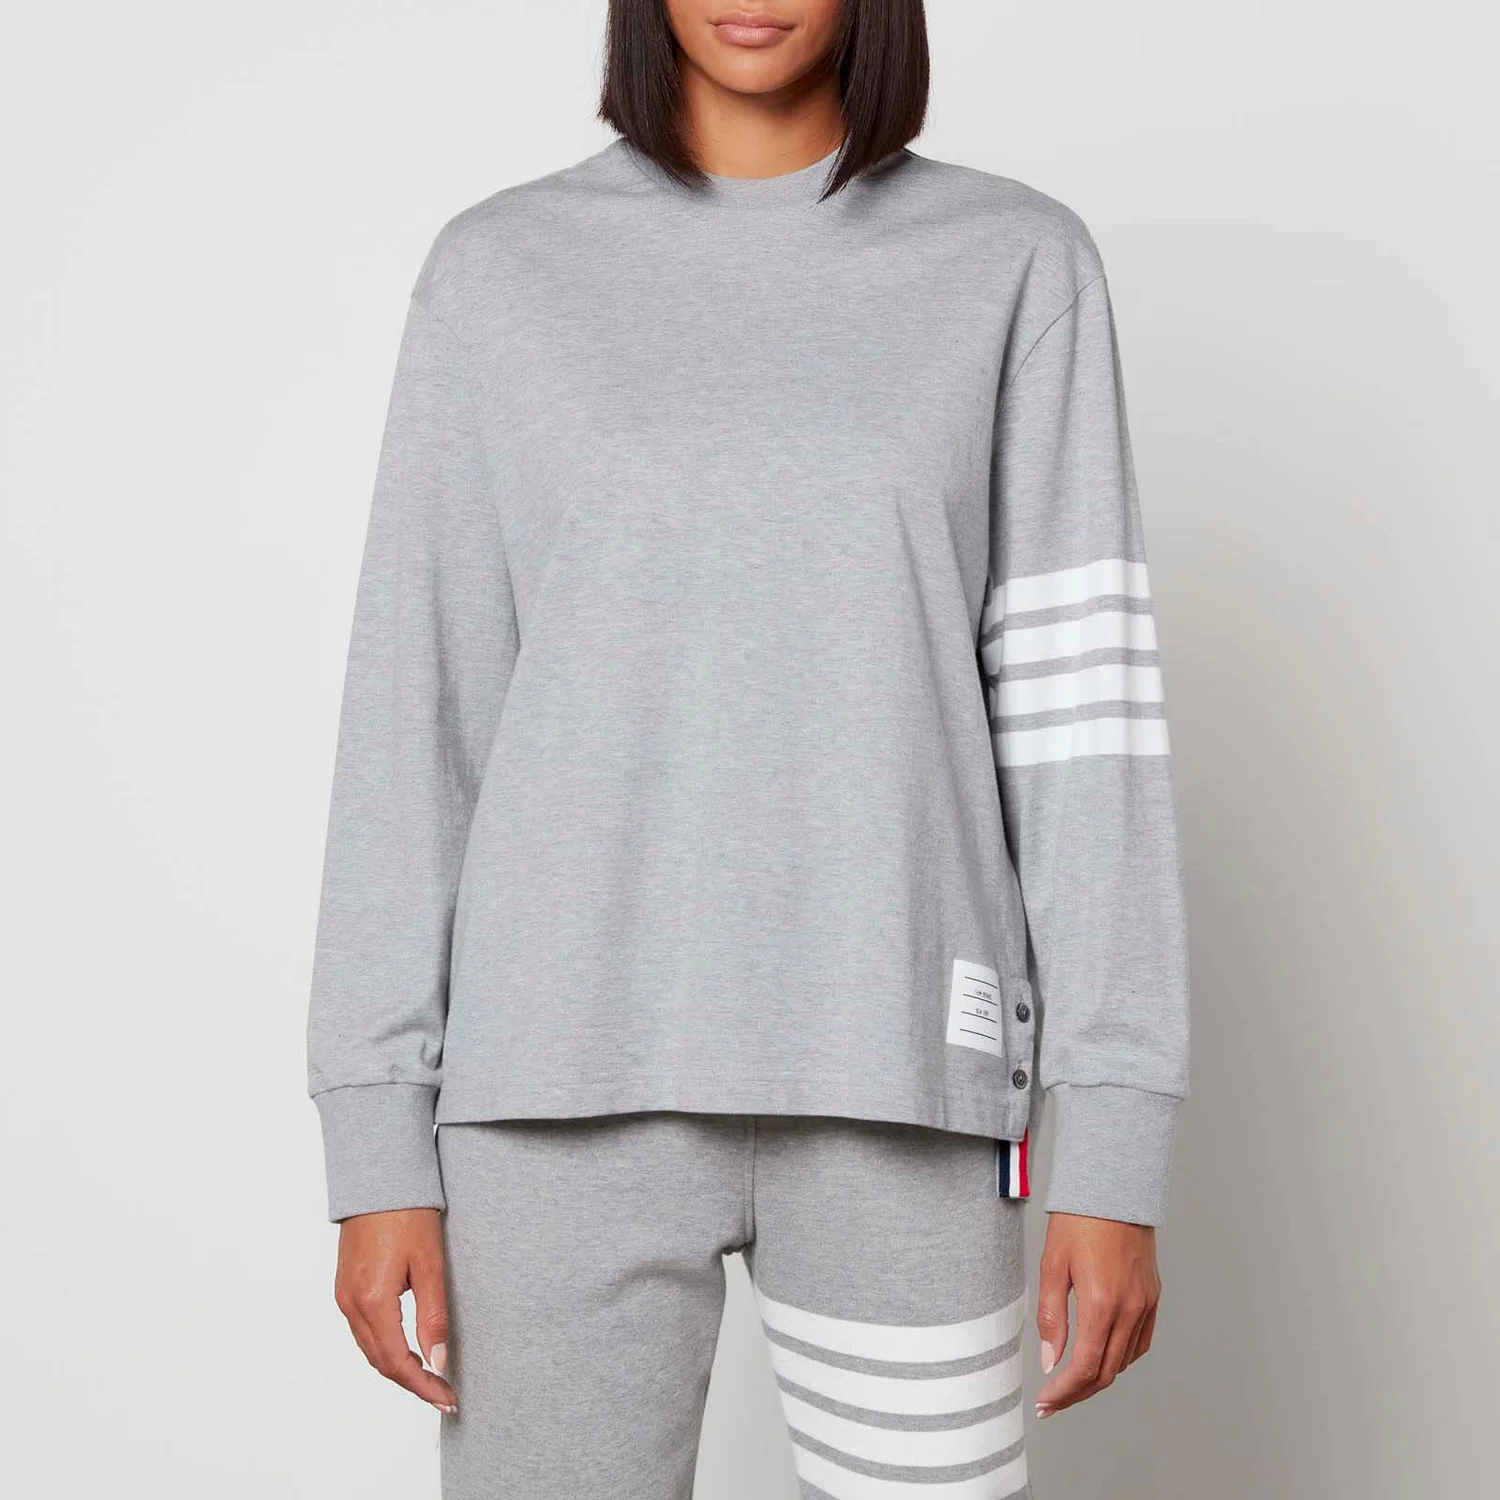 Thom Browne Women's Long Sleeve Oversized T-Shirt - Light Grey - IT 38/UK 6